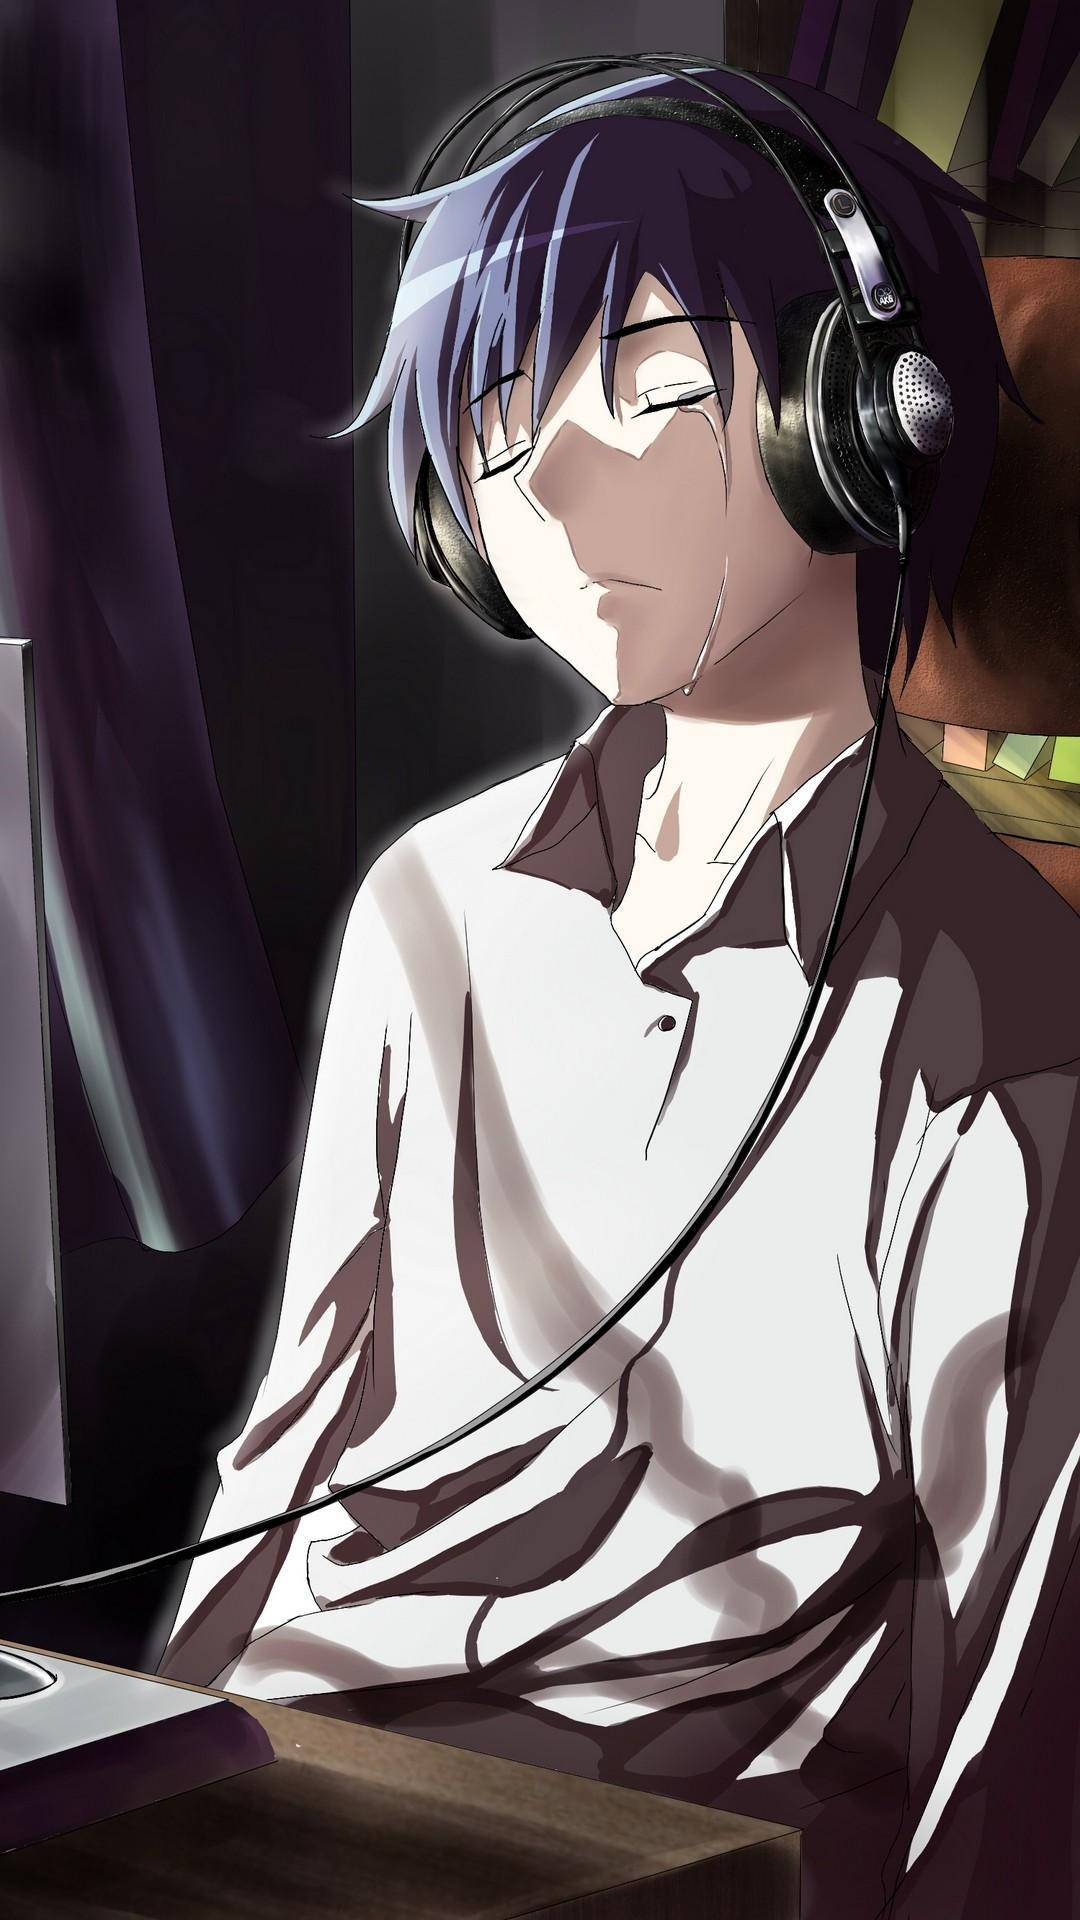 Sad Anime Boy With Headphones Wallpaper